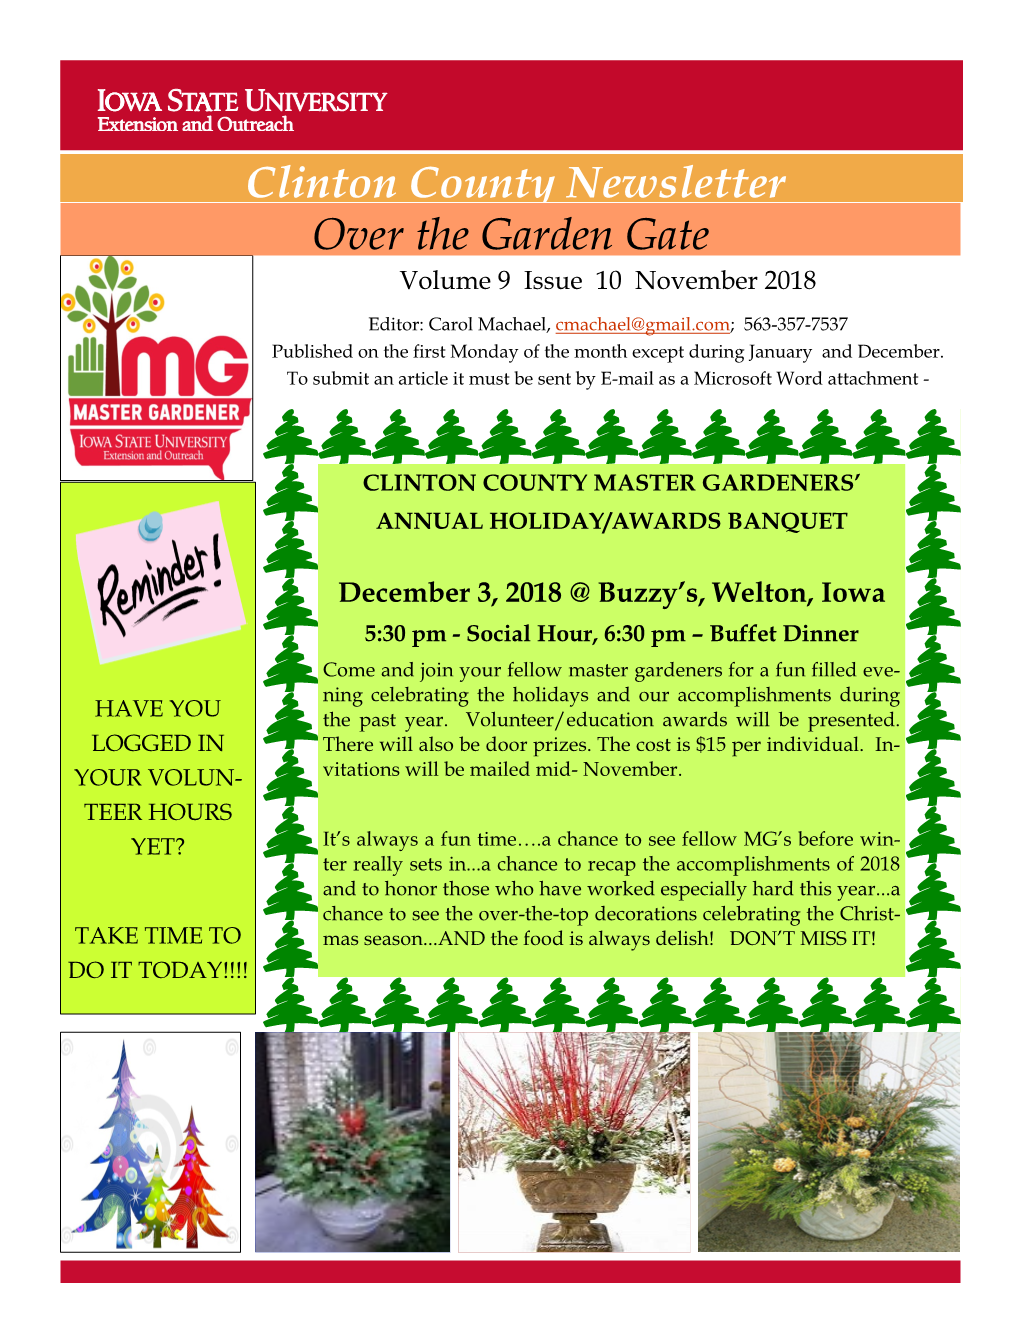 Clinton County Newsletter Over the Garden Gate Volume 9 Issue 10 November 2018